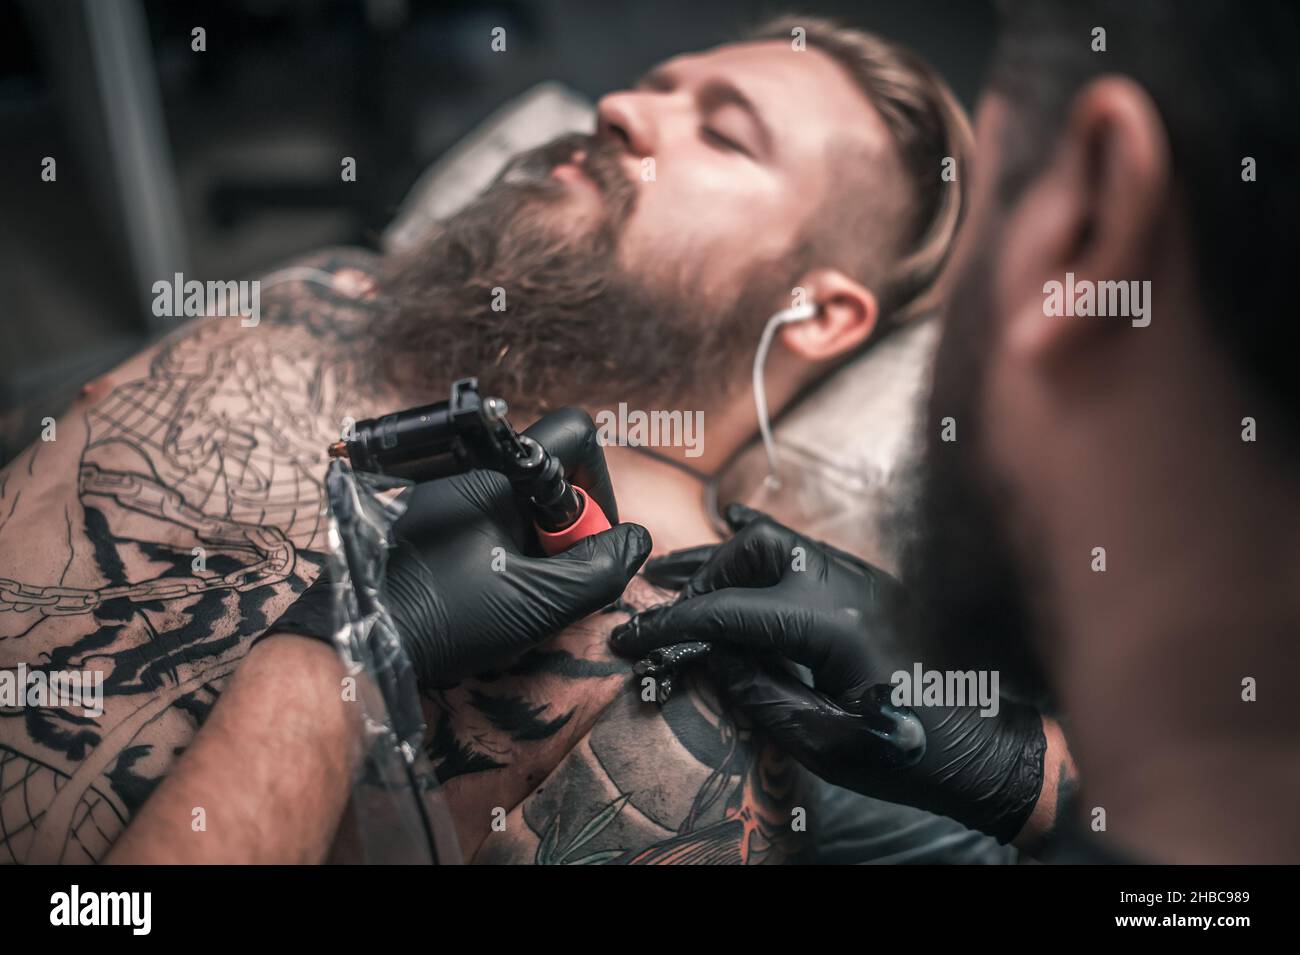 Tattoo artist showing process of making a tattoo Stock Photo